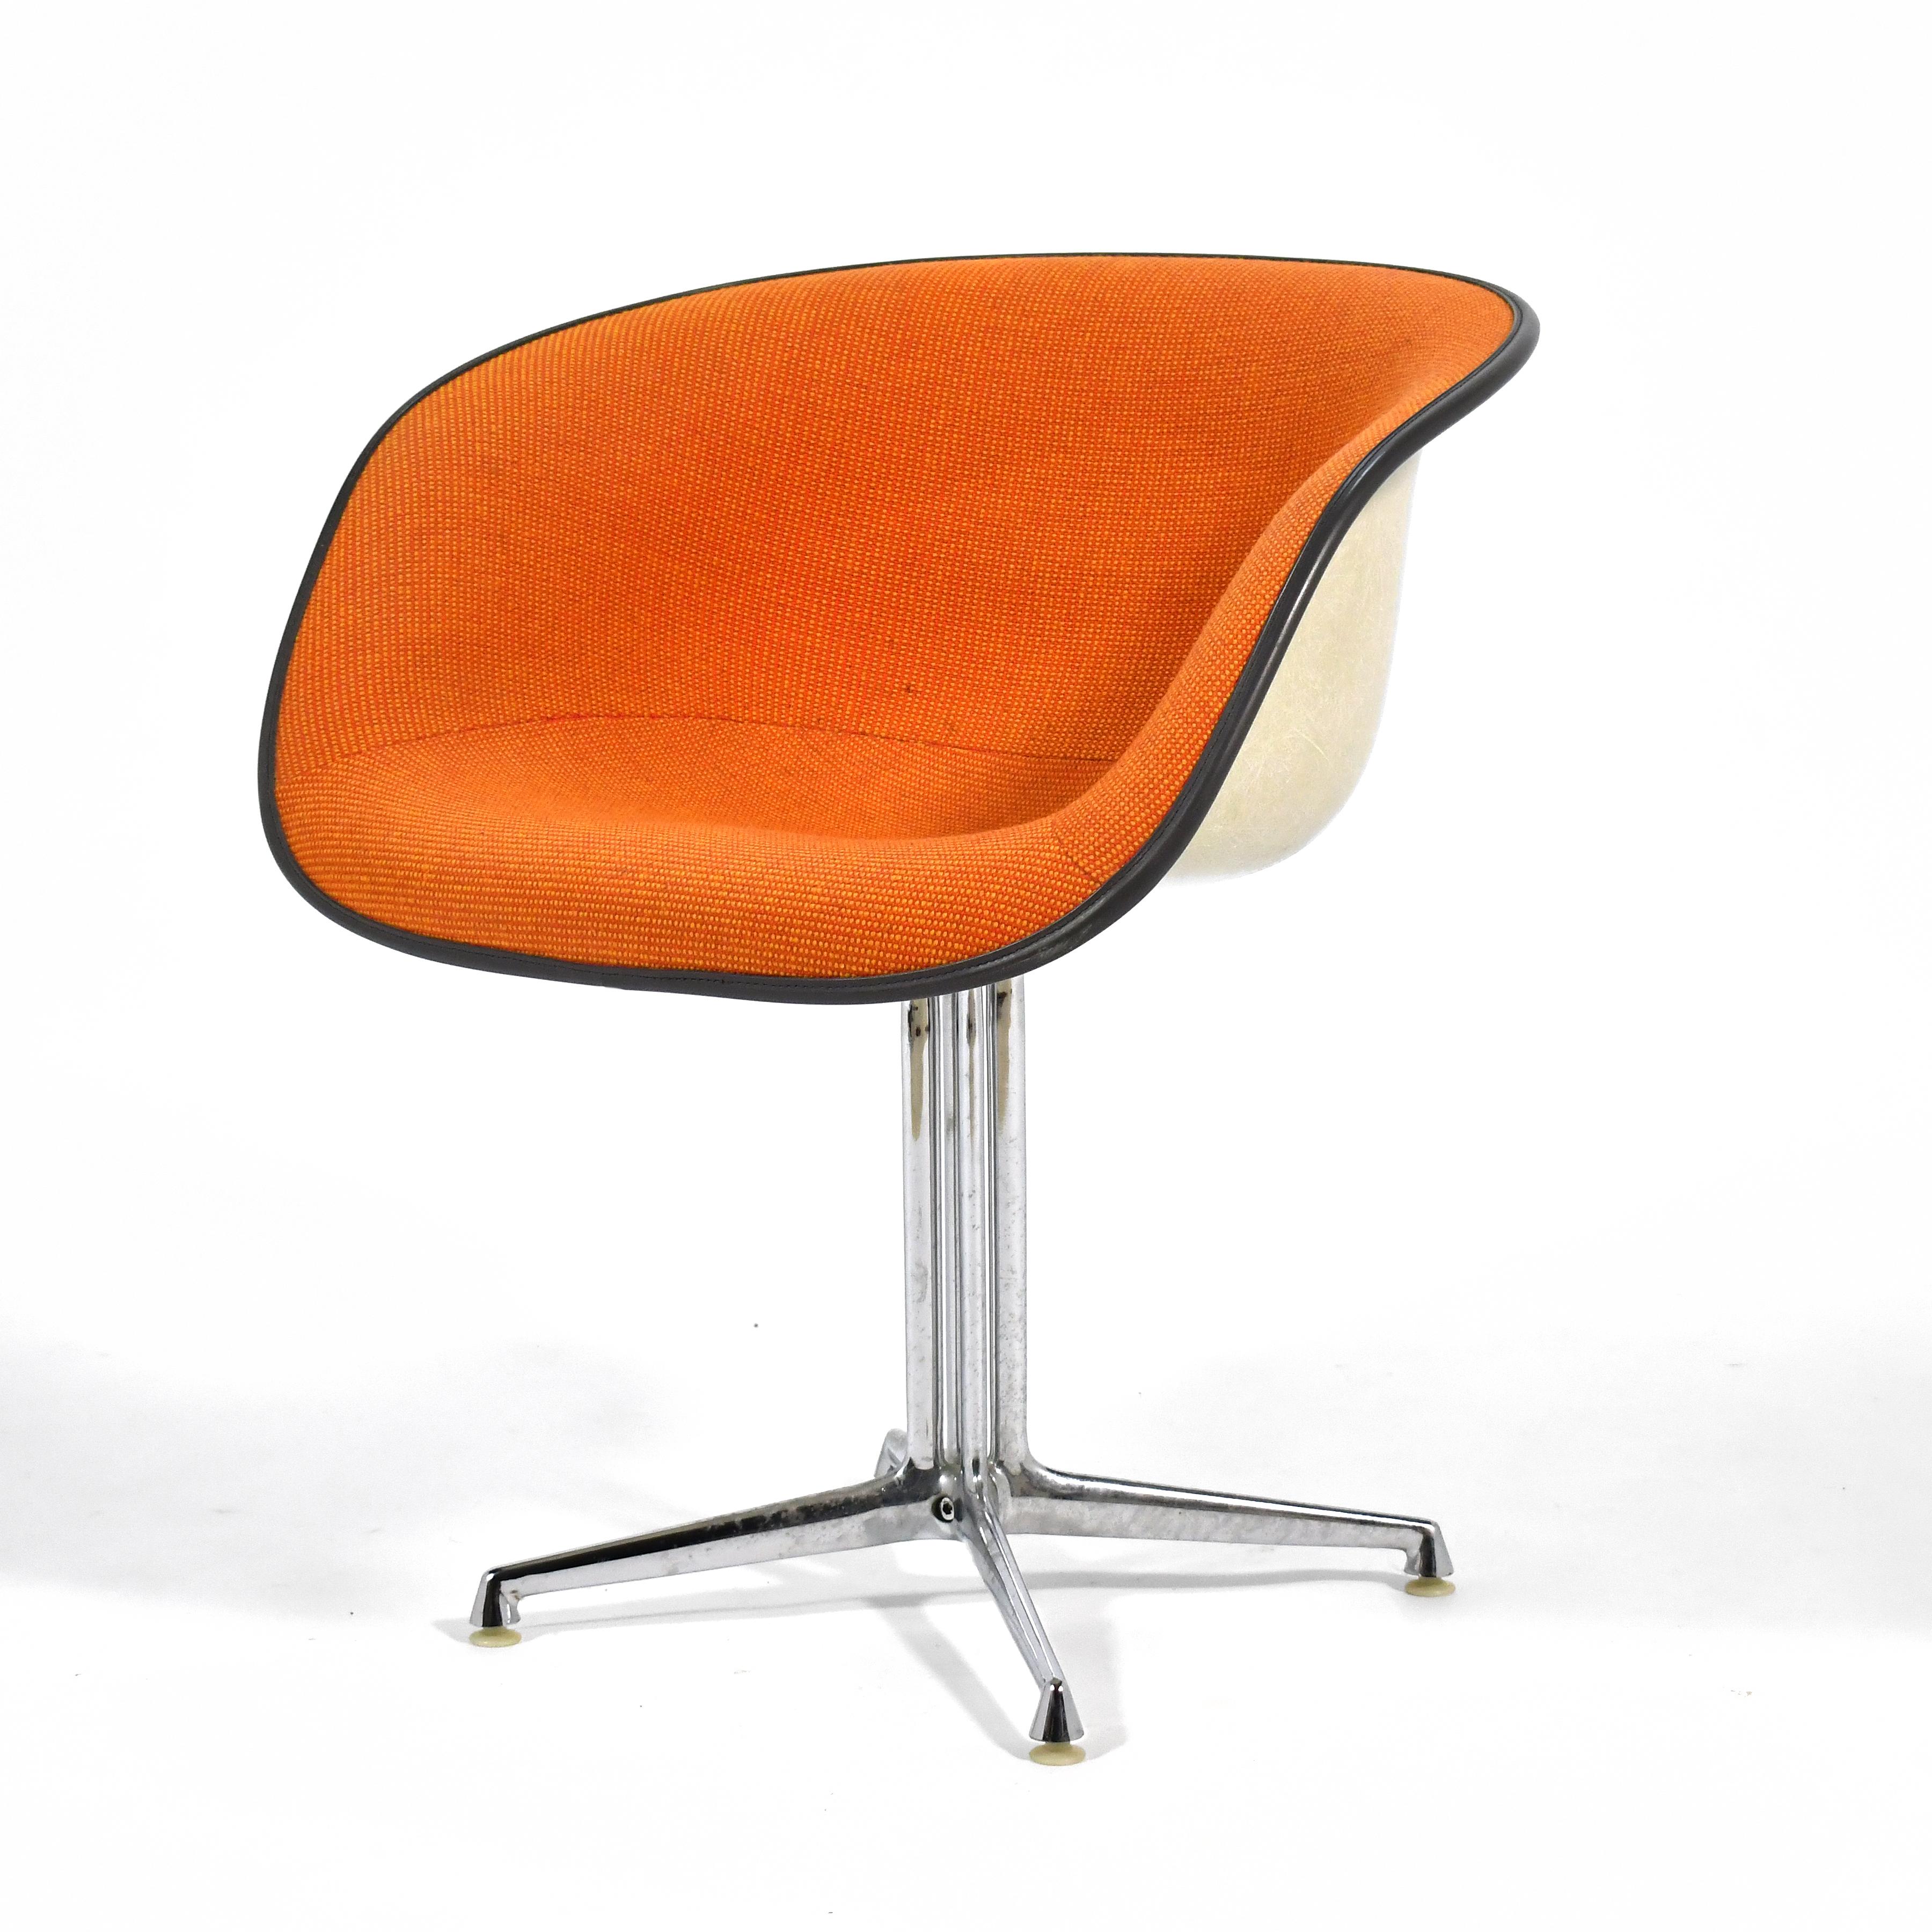 American Eames La Fonda Chairs by Herman Miller